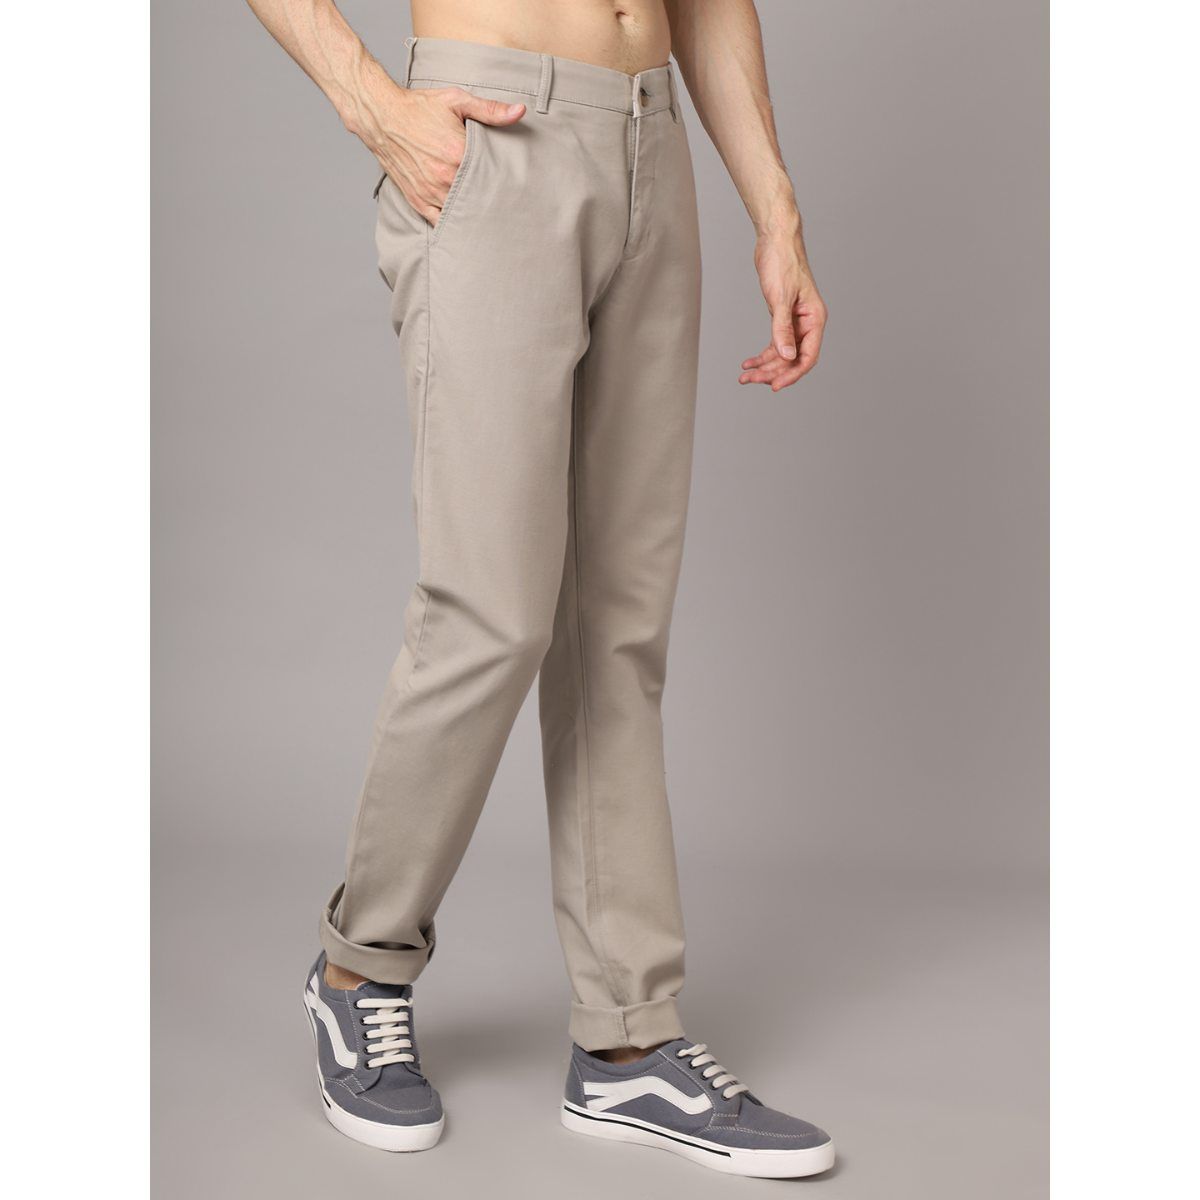 Buy Cantabil Men Navy Blue Regular Fit Formal Trouser (MTRF00009_Navy_30)  at Amazon.in